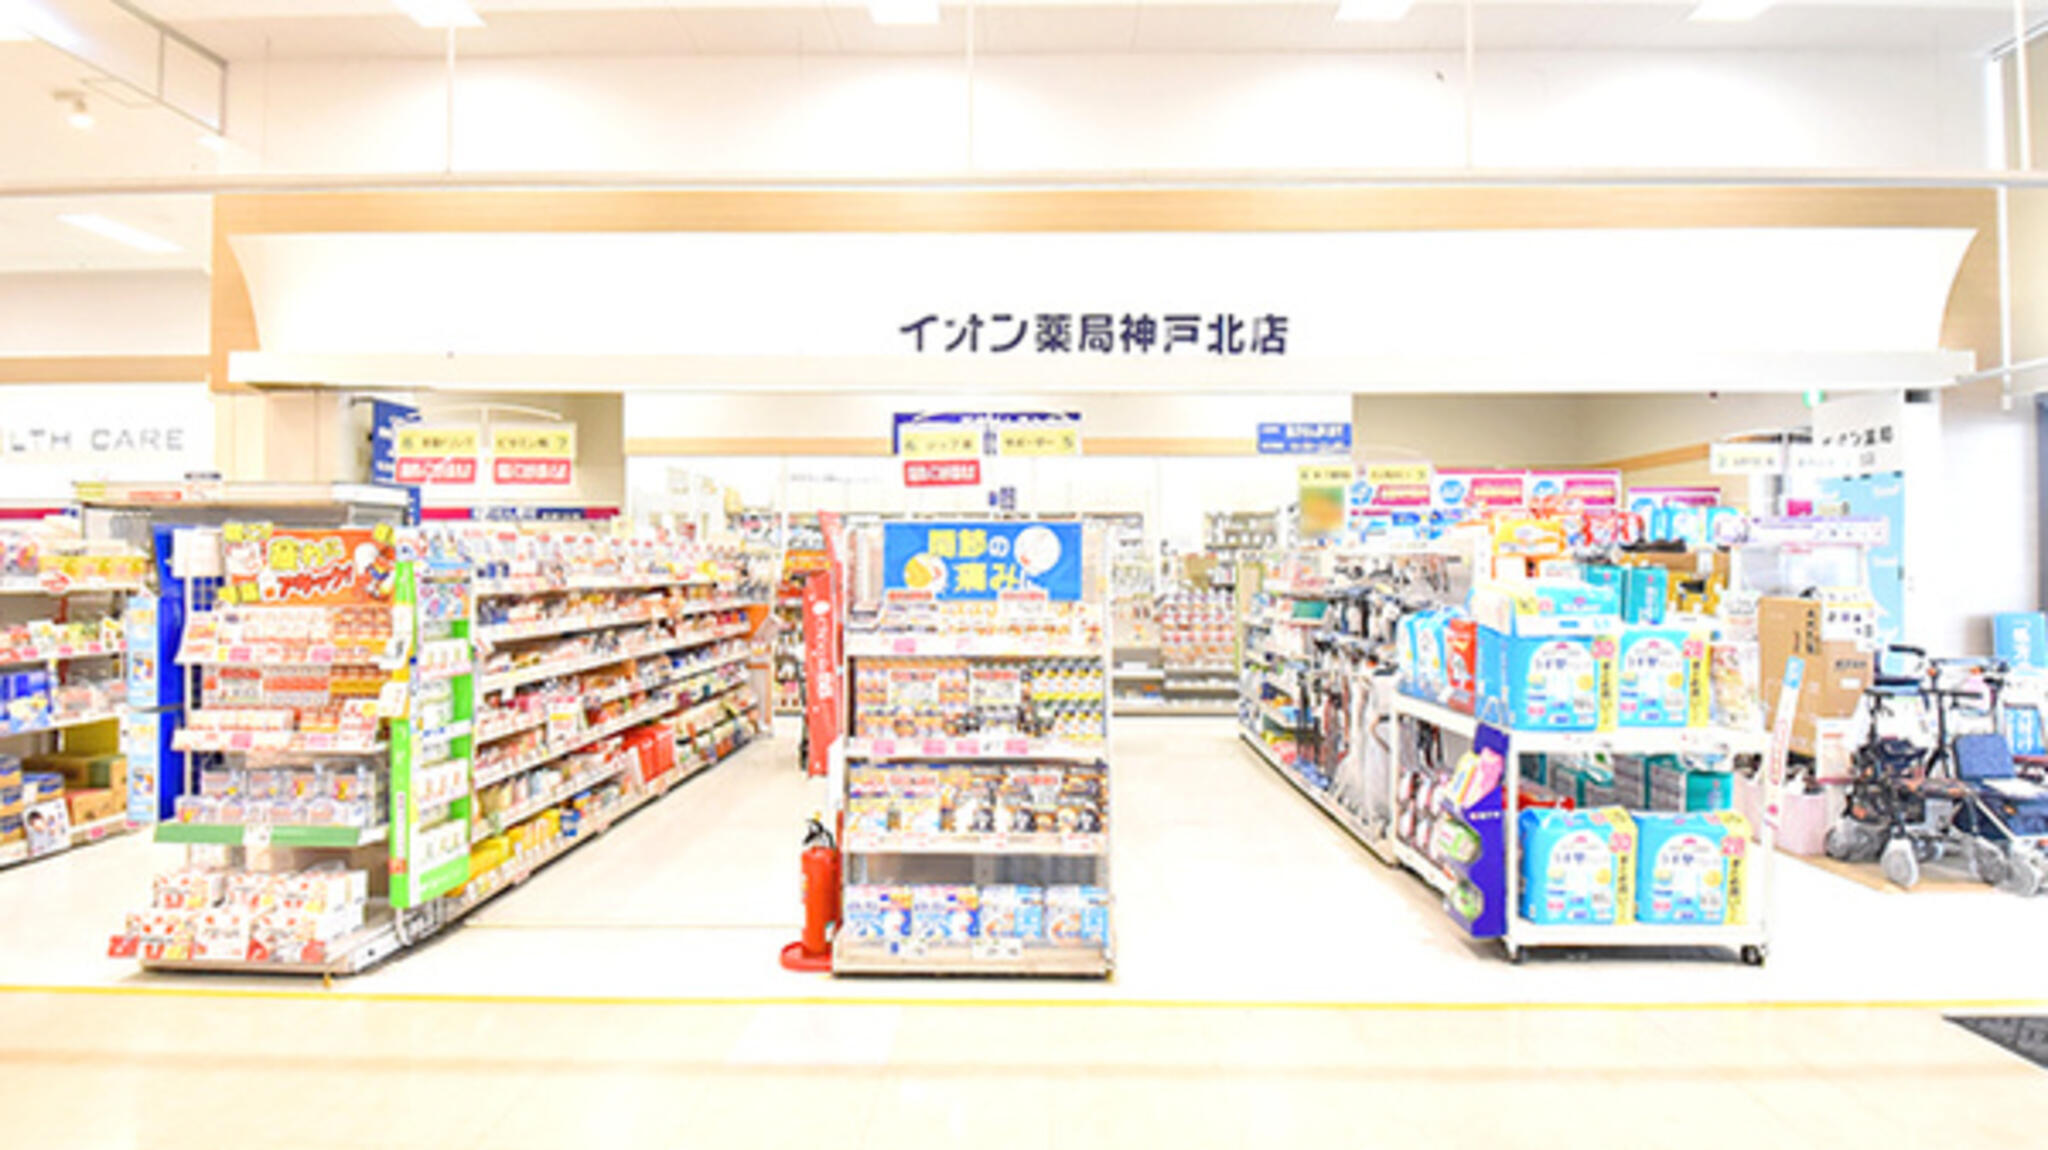 イオン薬局 神戸北店の代表写真3